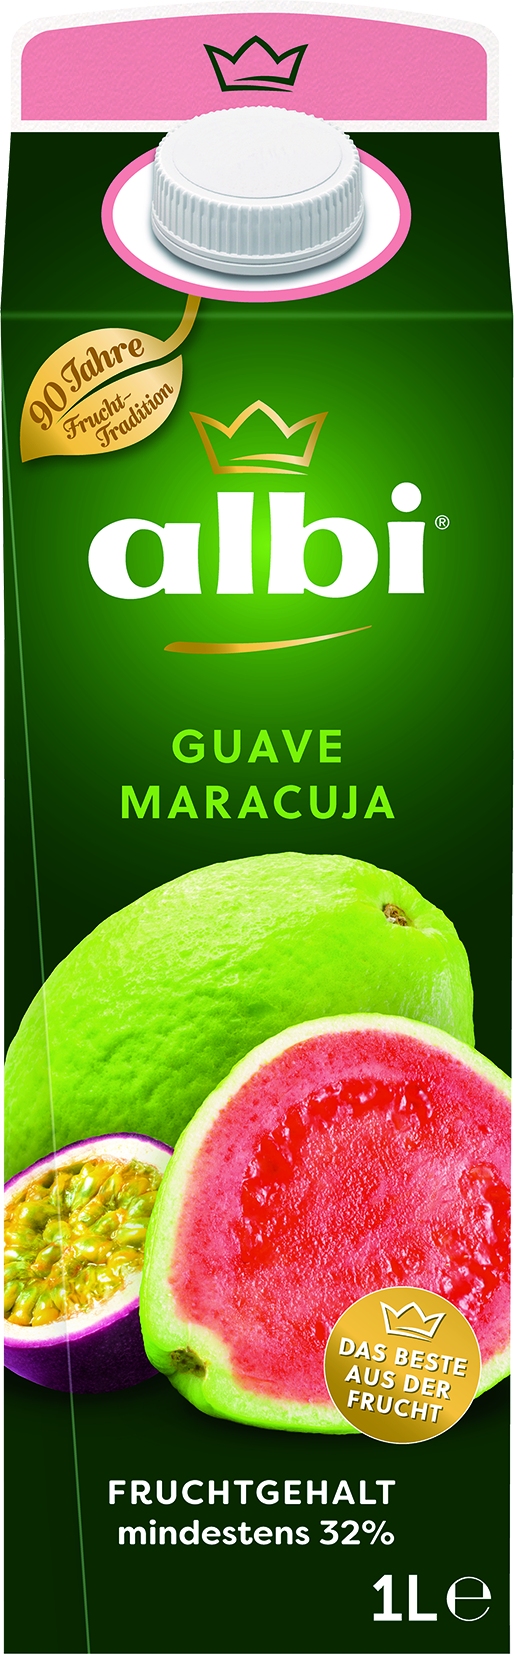 Guave-Maracuja   